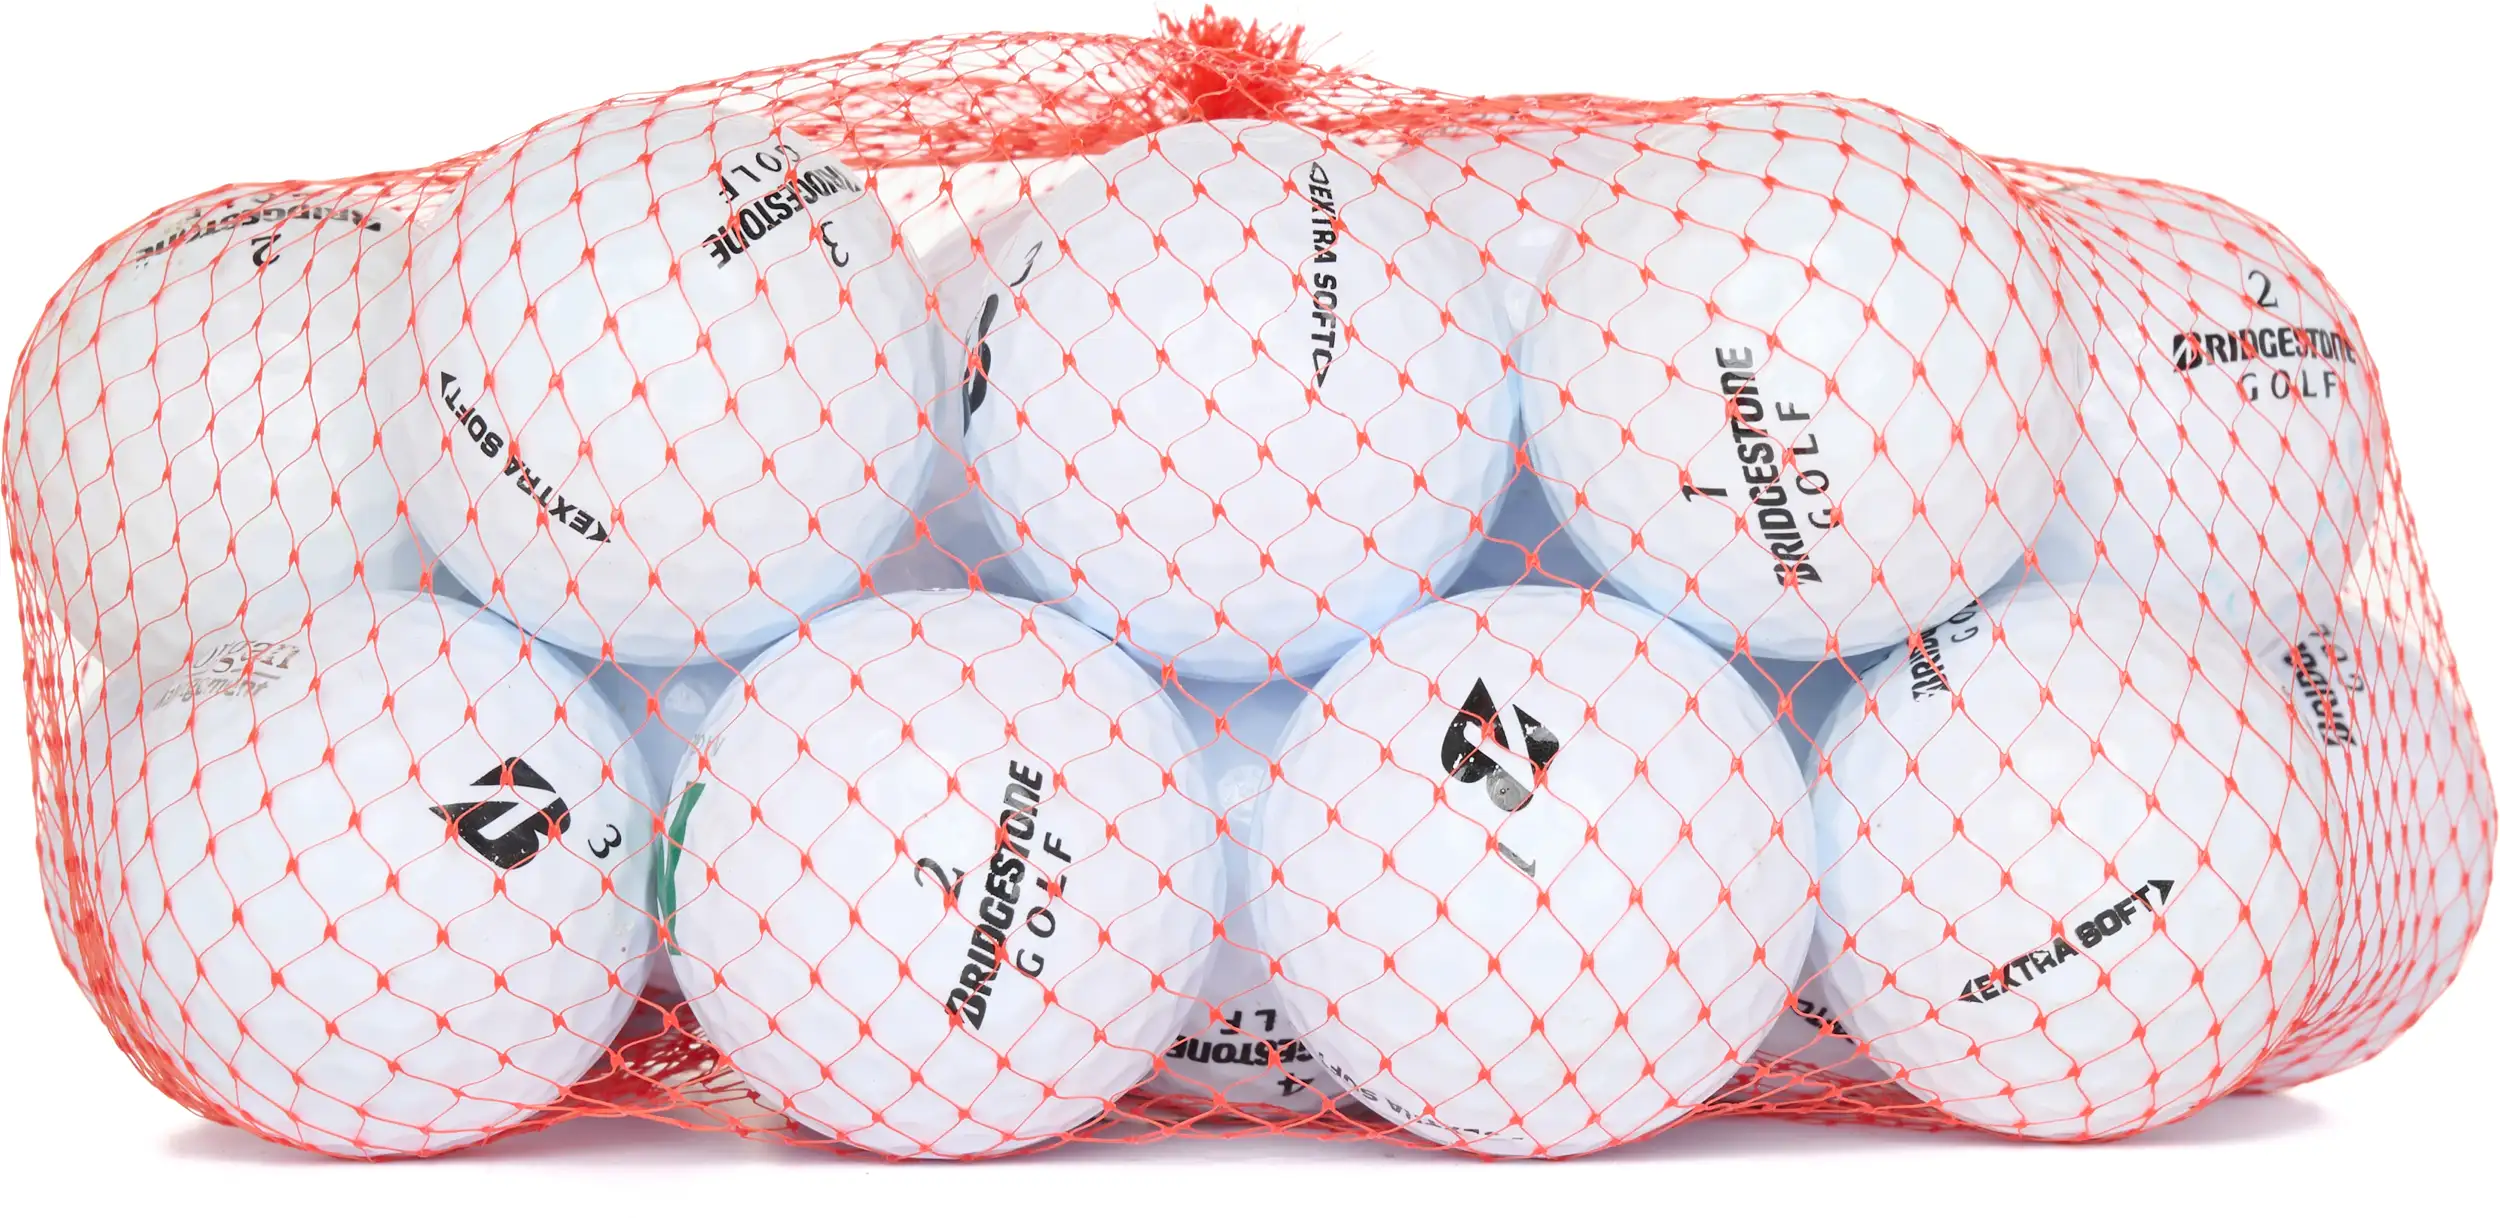 25 Bridgestone Extra Soft Lakeballs